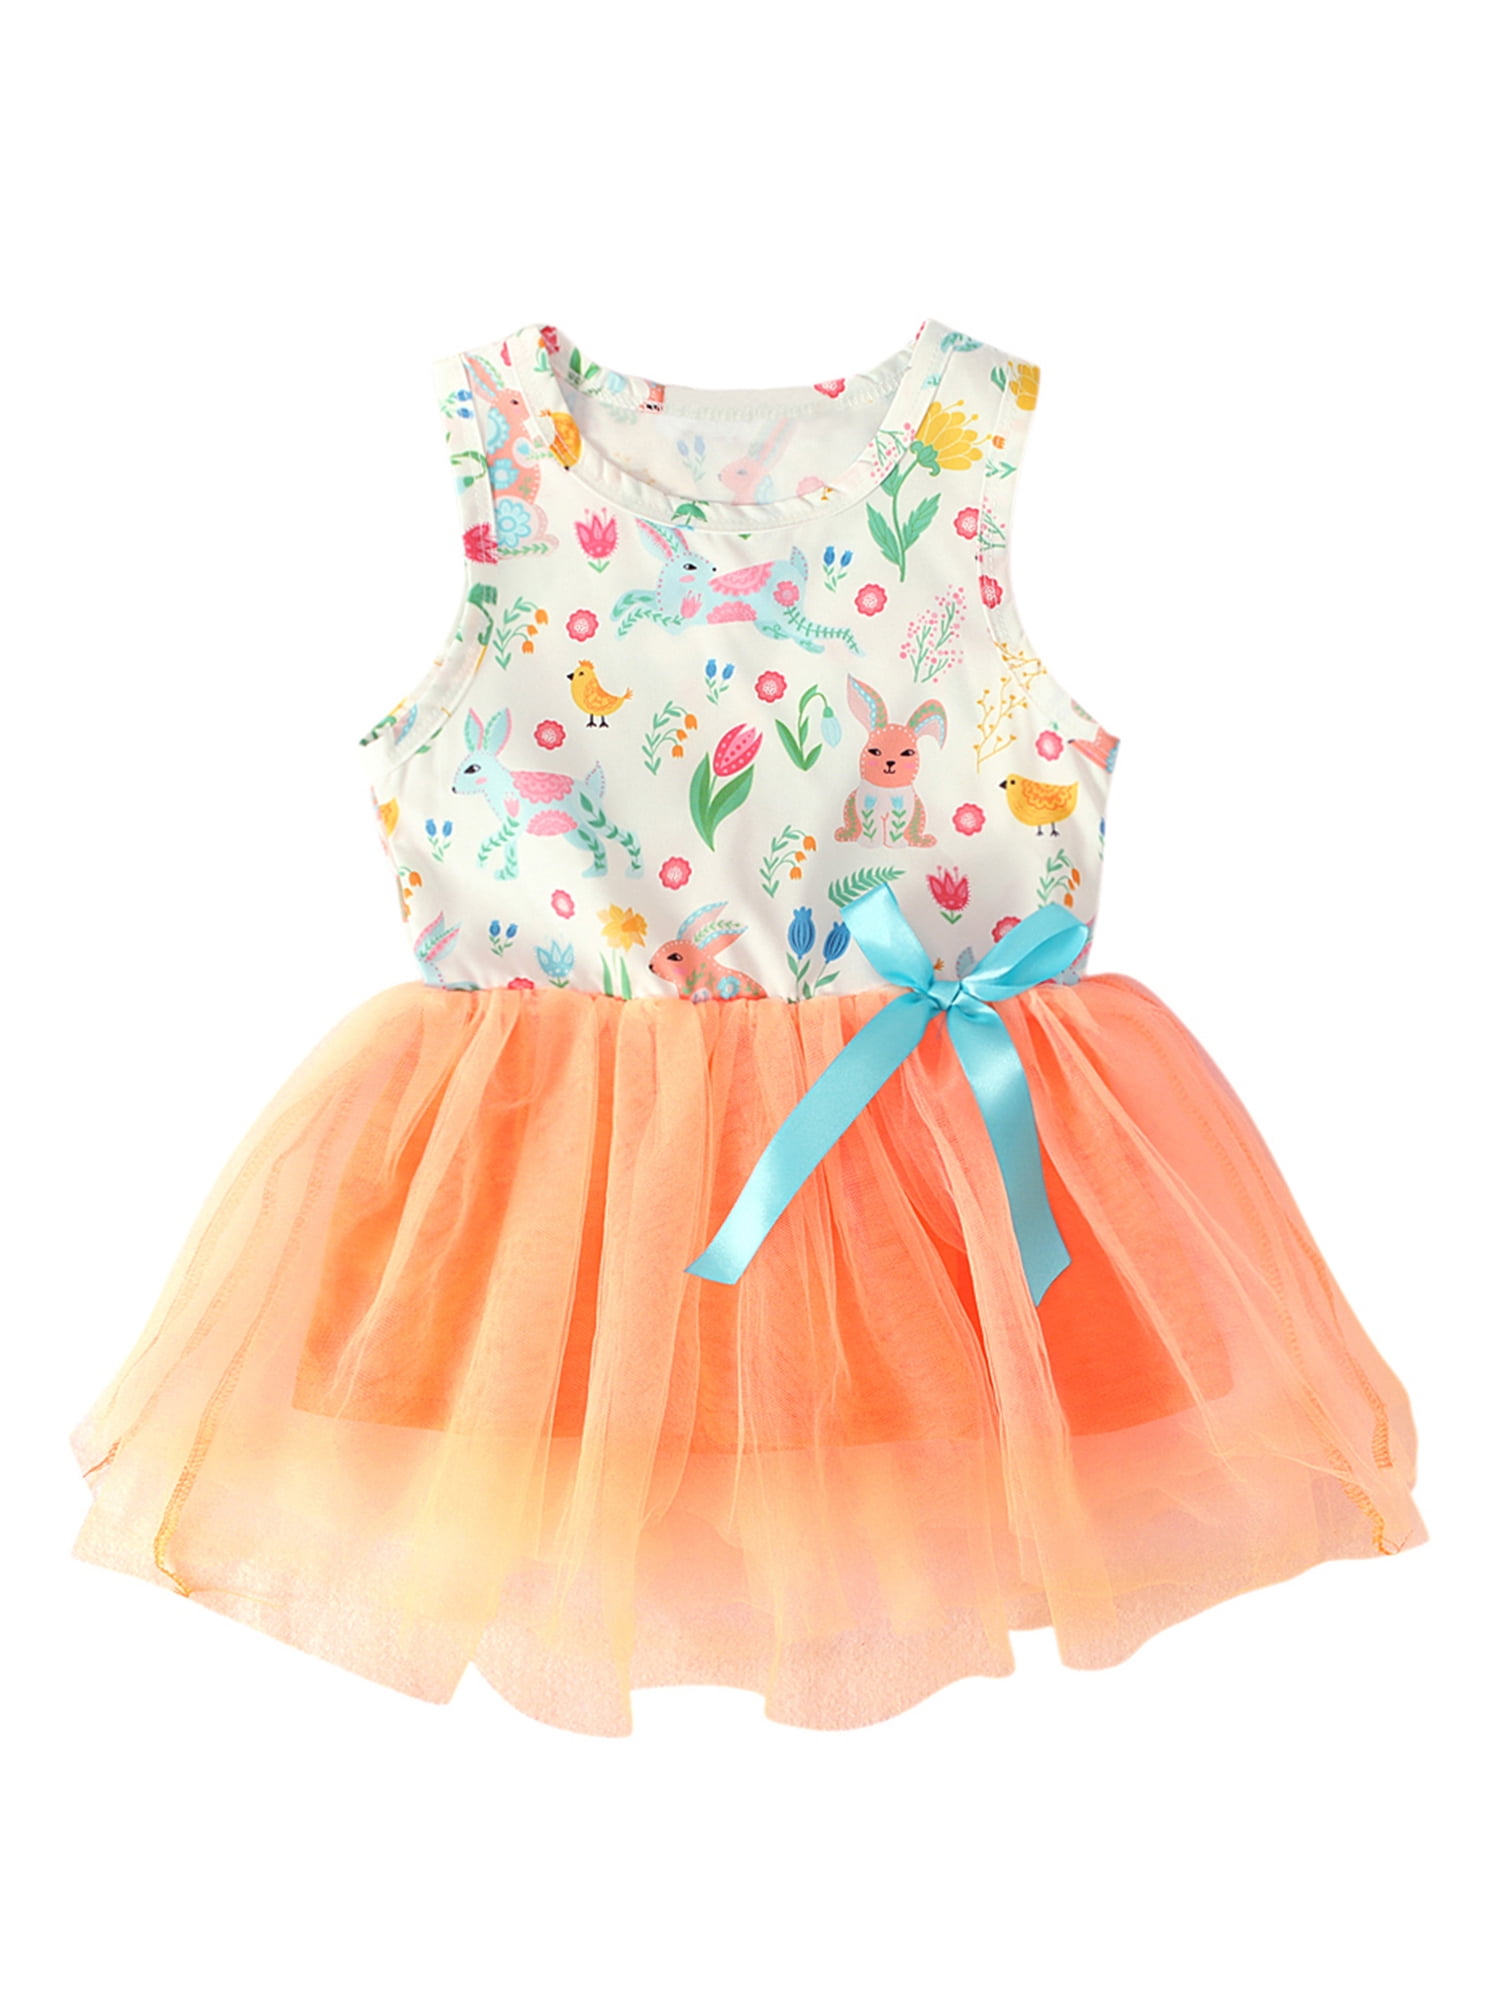 Loalirando Summer Toddler Baby Girls Flower Sequins Round Collar Sleeveless Formal Dress Wedding Party Tutu Gown Sundress 